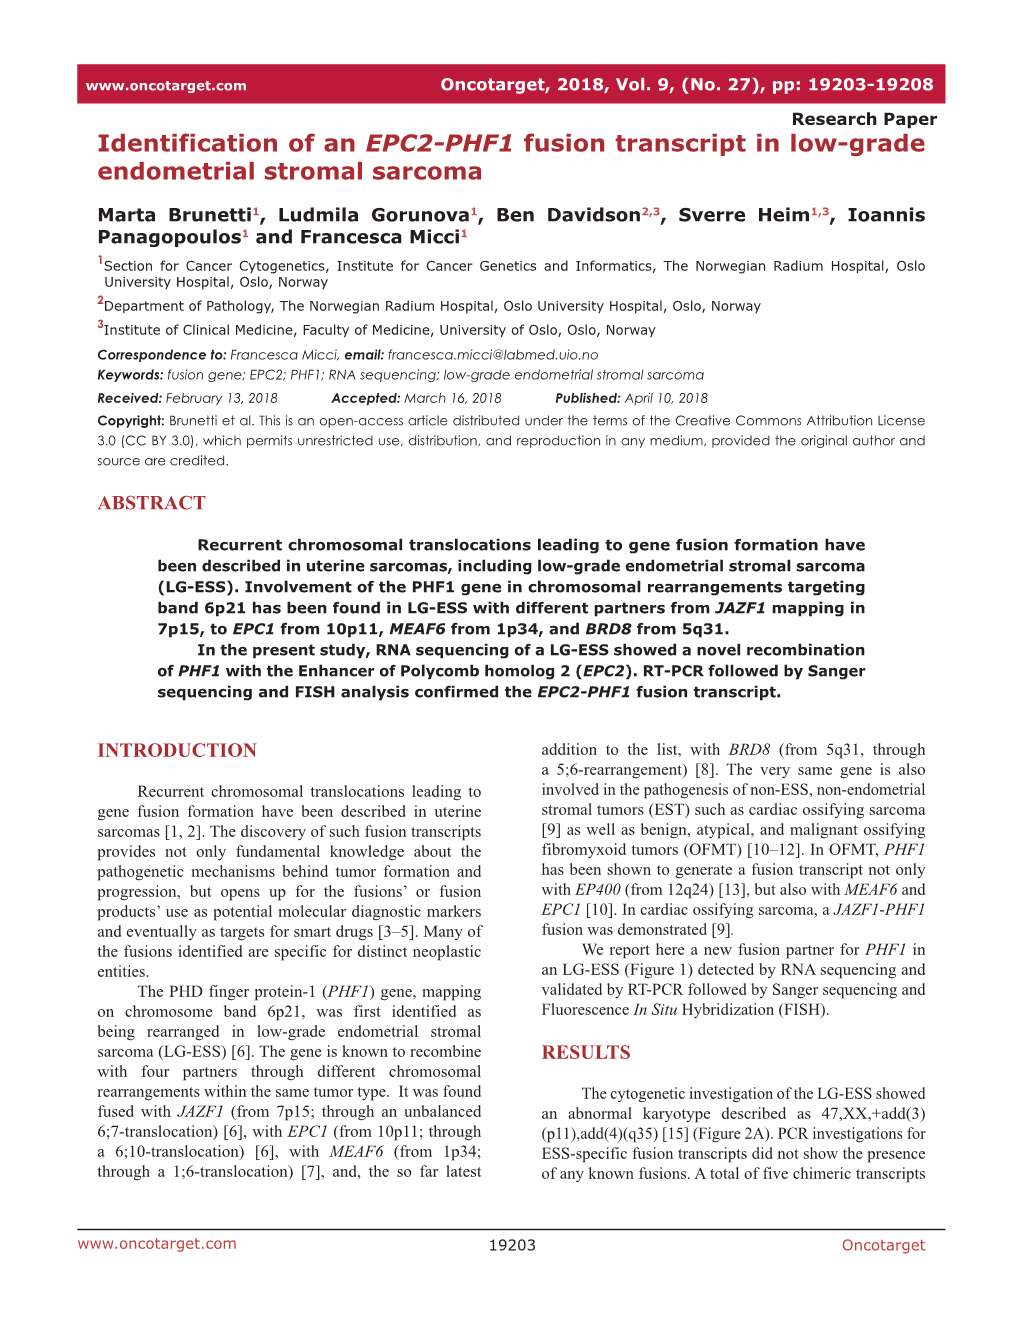 Identification of an EPC2-PHF1 Fusion Transcript in Low-Grade Endometrial Stromal Sarcoma